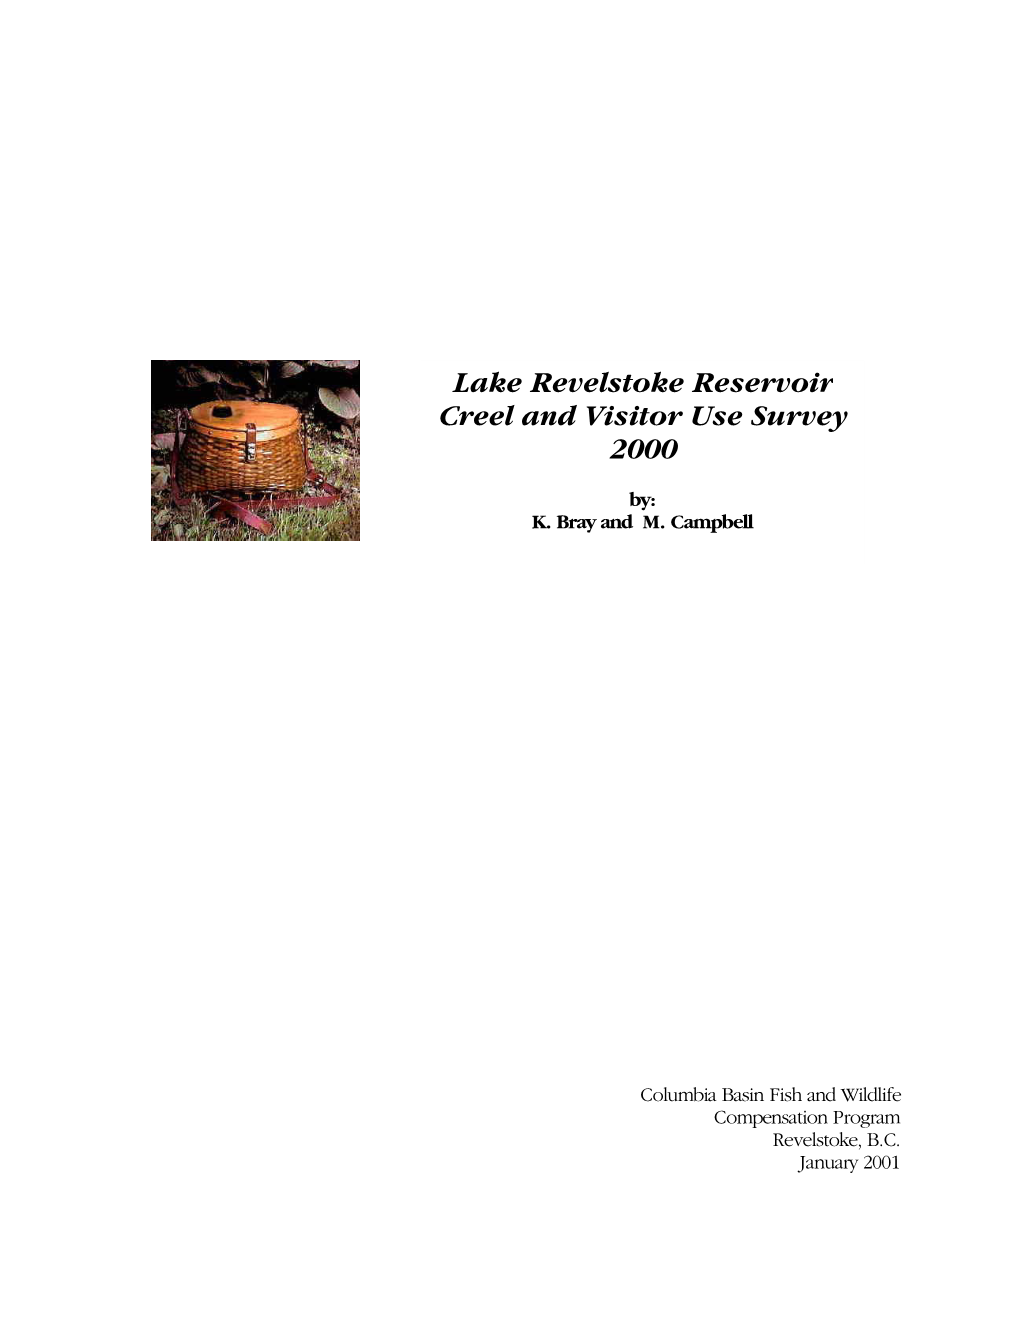 Lake Revelstoke Reservoir Creel and Visitor Use Survey 2000